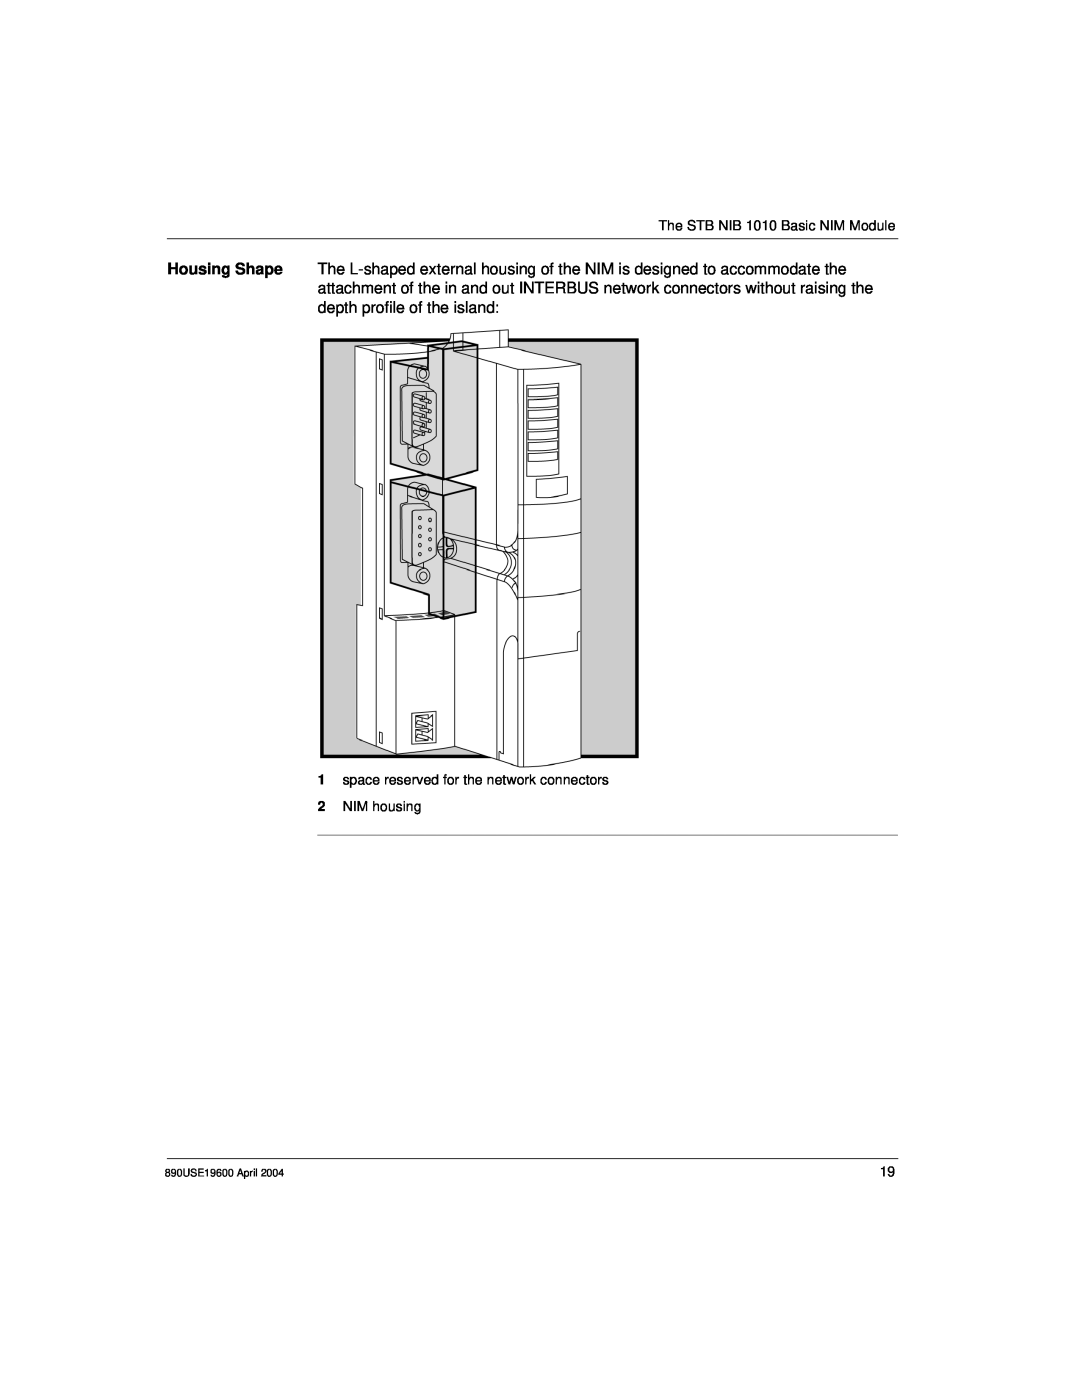 Schneider Electric INTERBUS Basic Network Interface Module manual The STB NIB 1010 Basic NIM Module, 890USE19600 April 